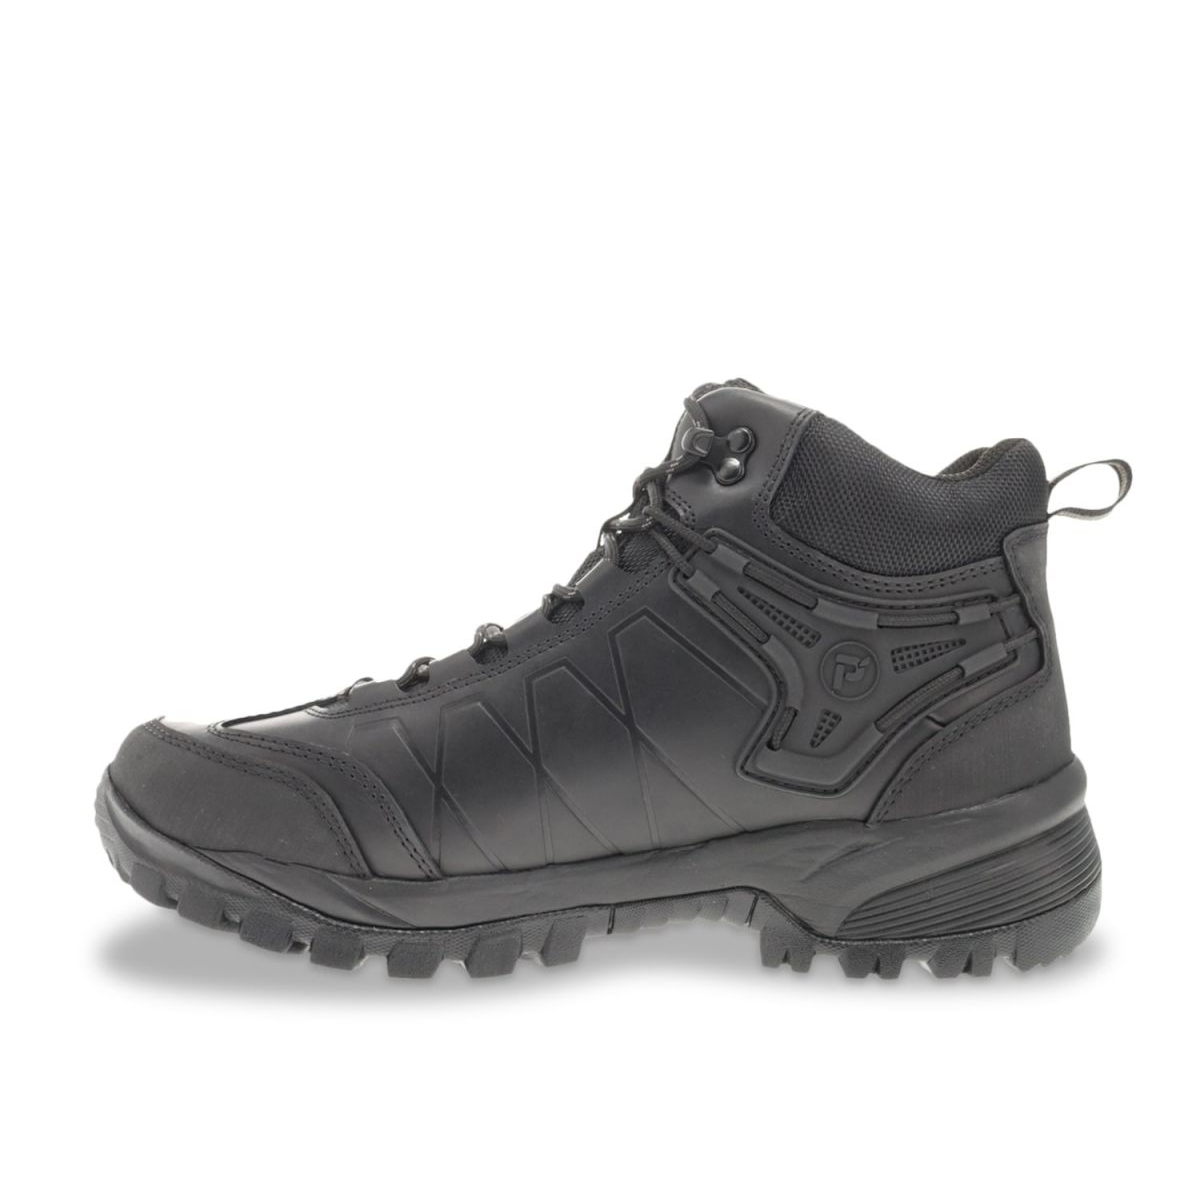 Propet Men's Ridge Walker Force Hiking Boots Black - MBA052LBLK BLACK - BLACK, 9.5 Wide